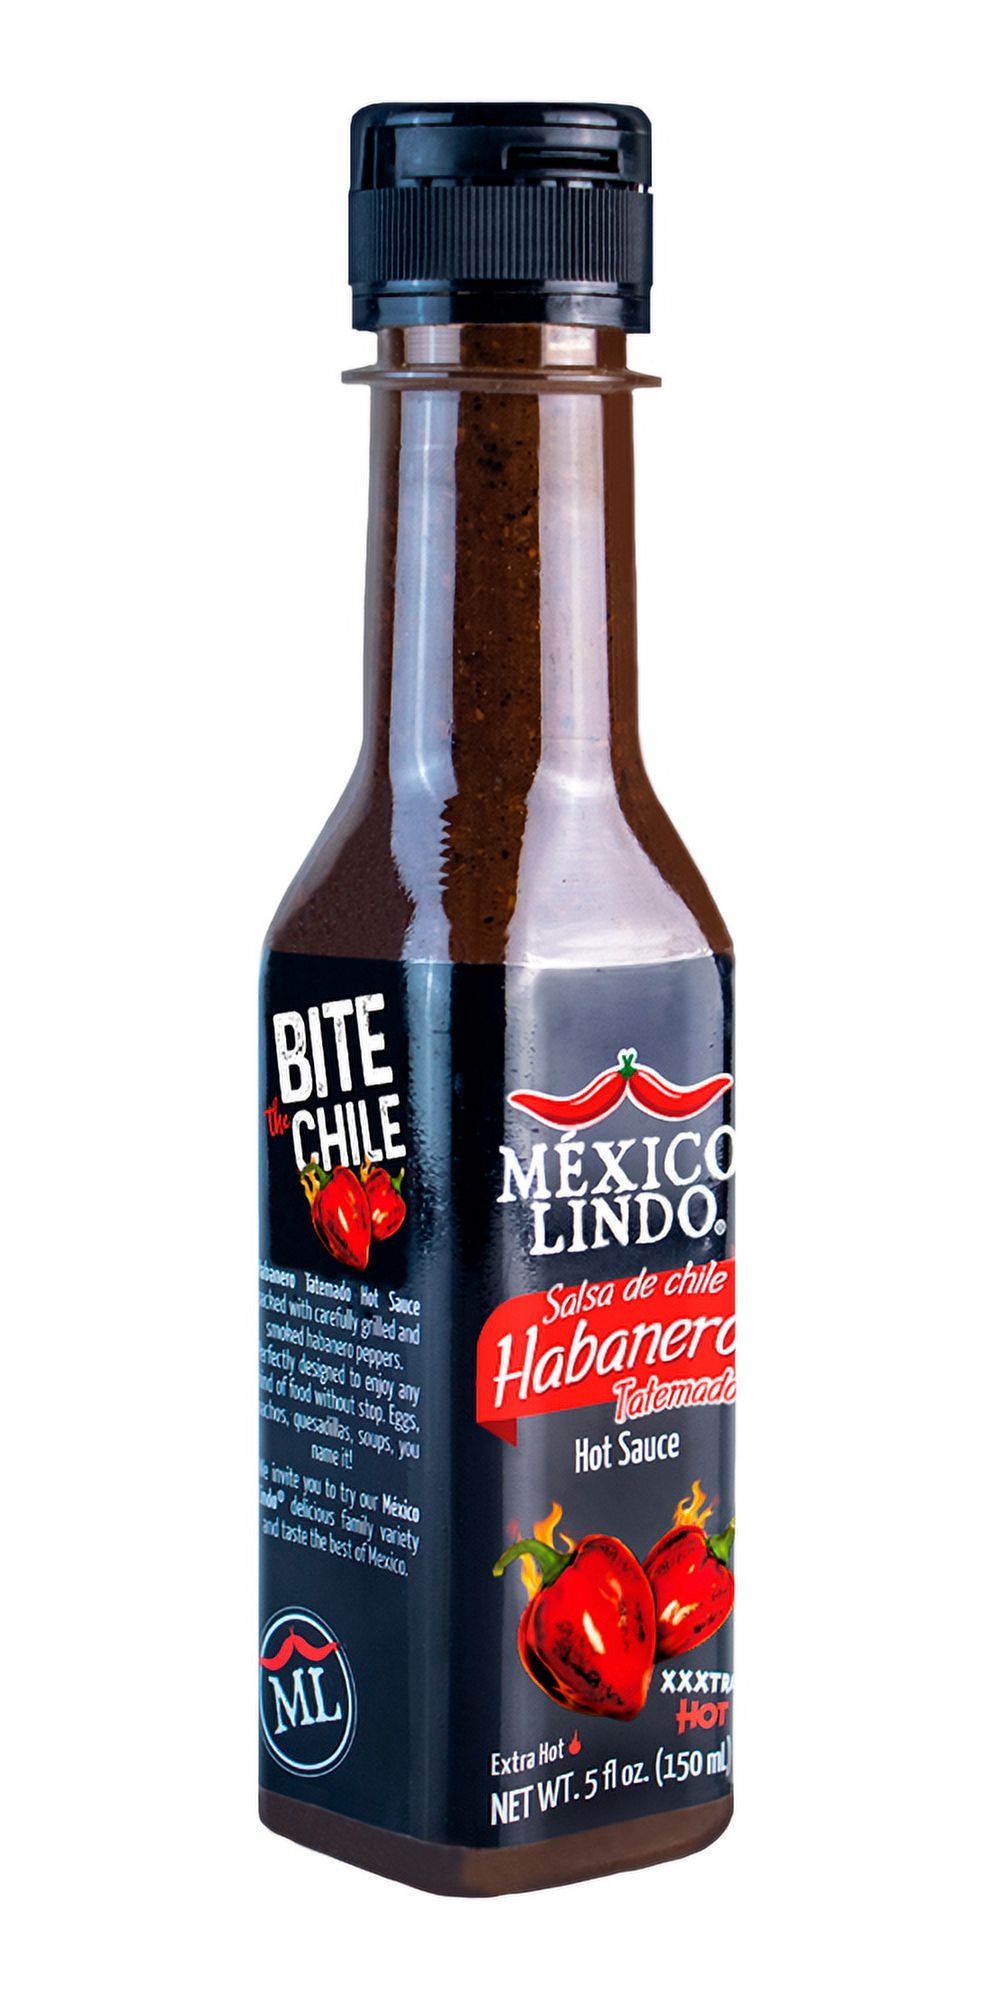 Mexico Lindo Habanero Hot Sauce Xxxtra Hot, 5 oz, Pack of 12 - image 2 of 9